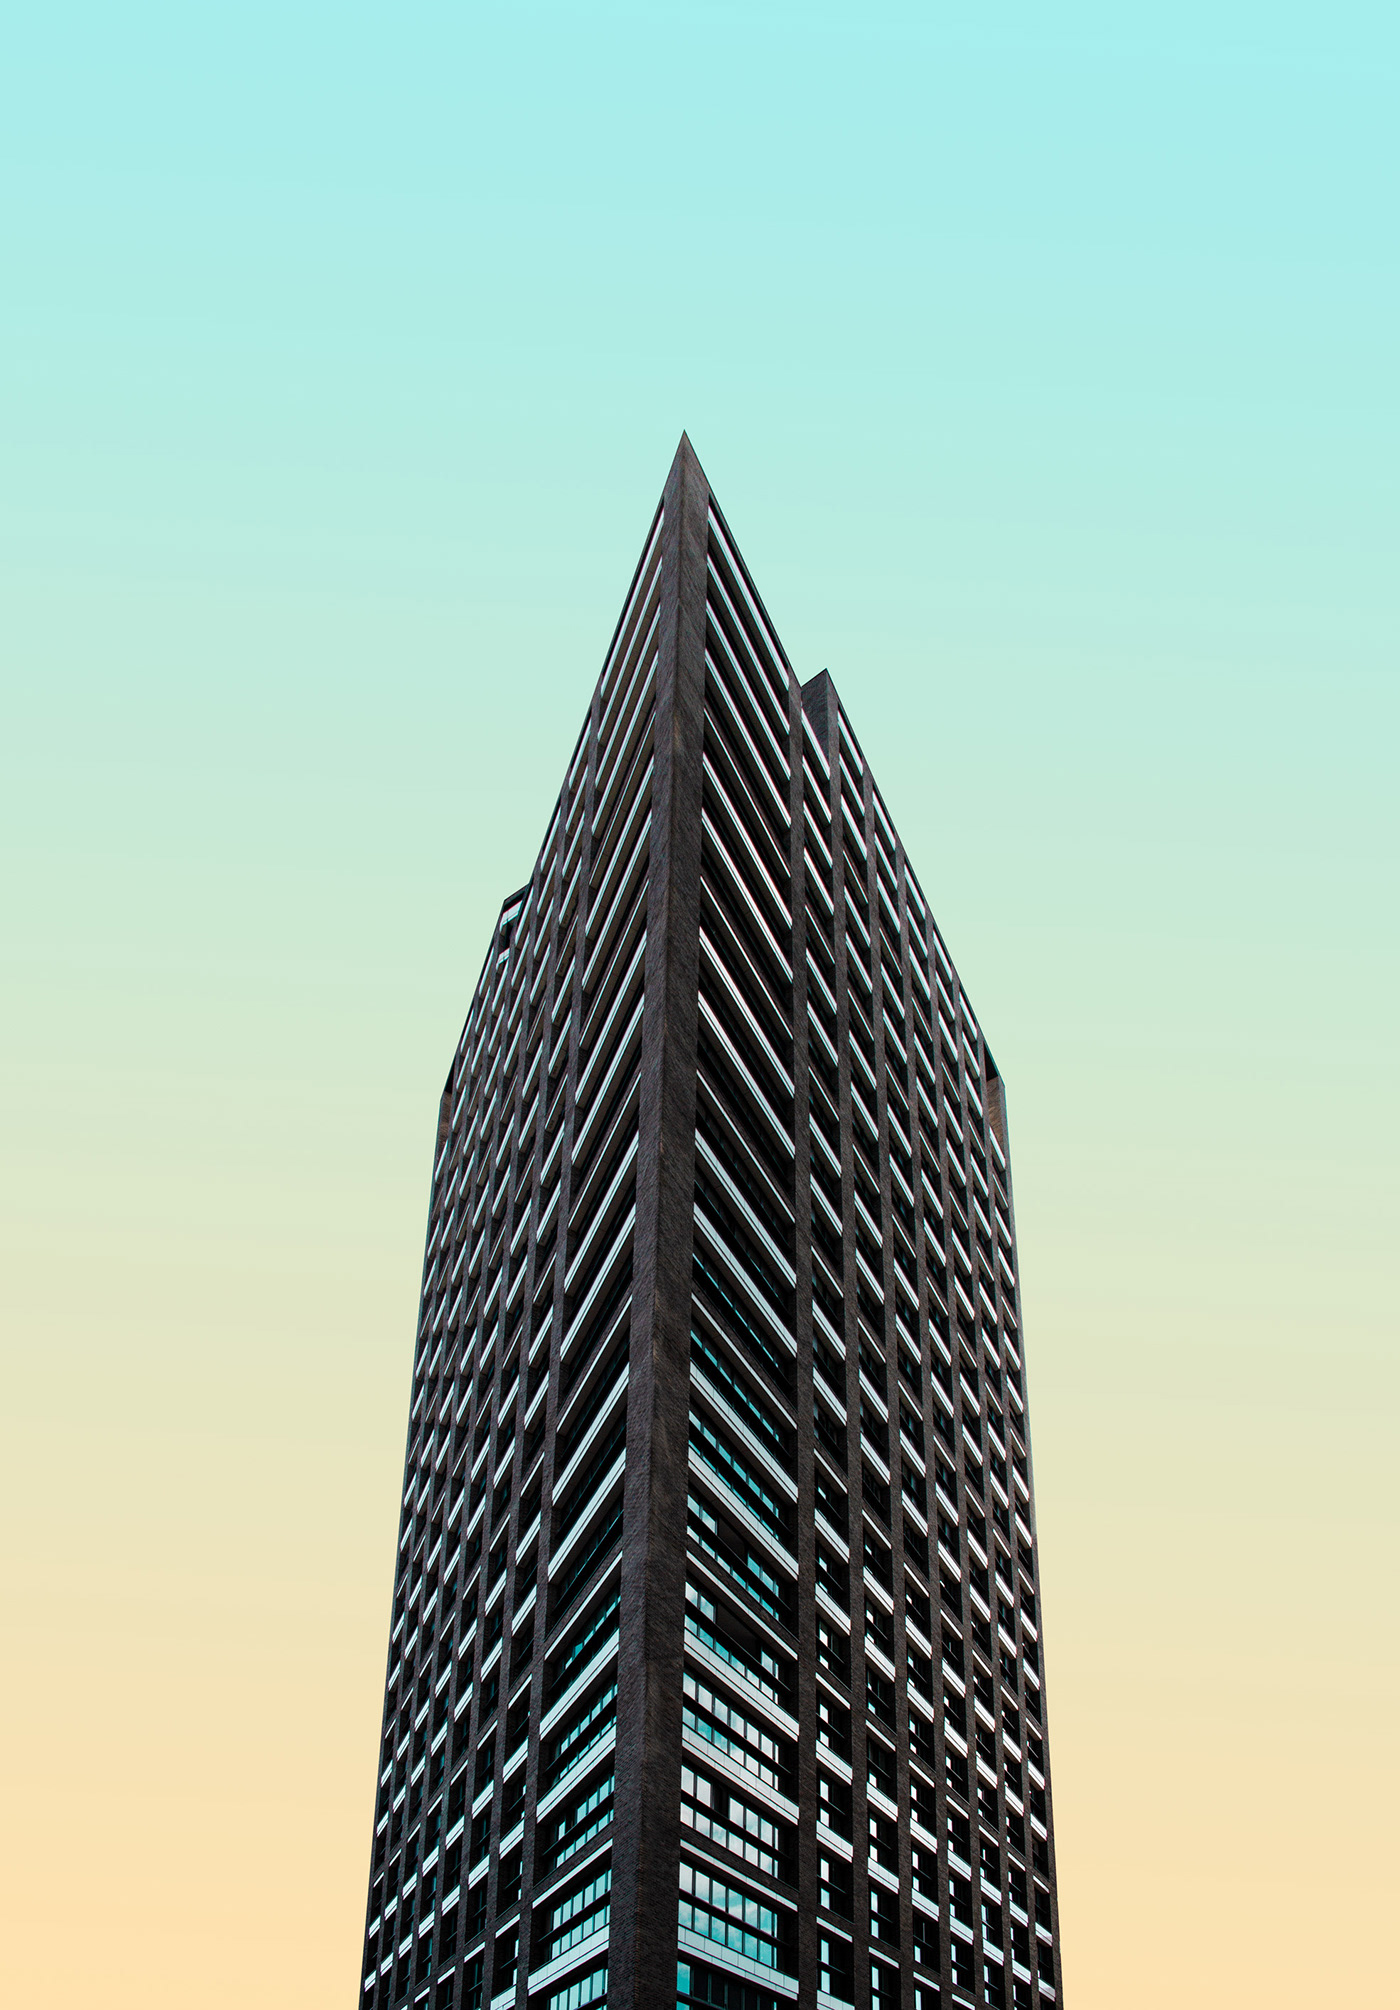 minimal Minimalism pastel modern architecture London building pattern geometry Urban skyscraper